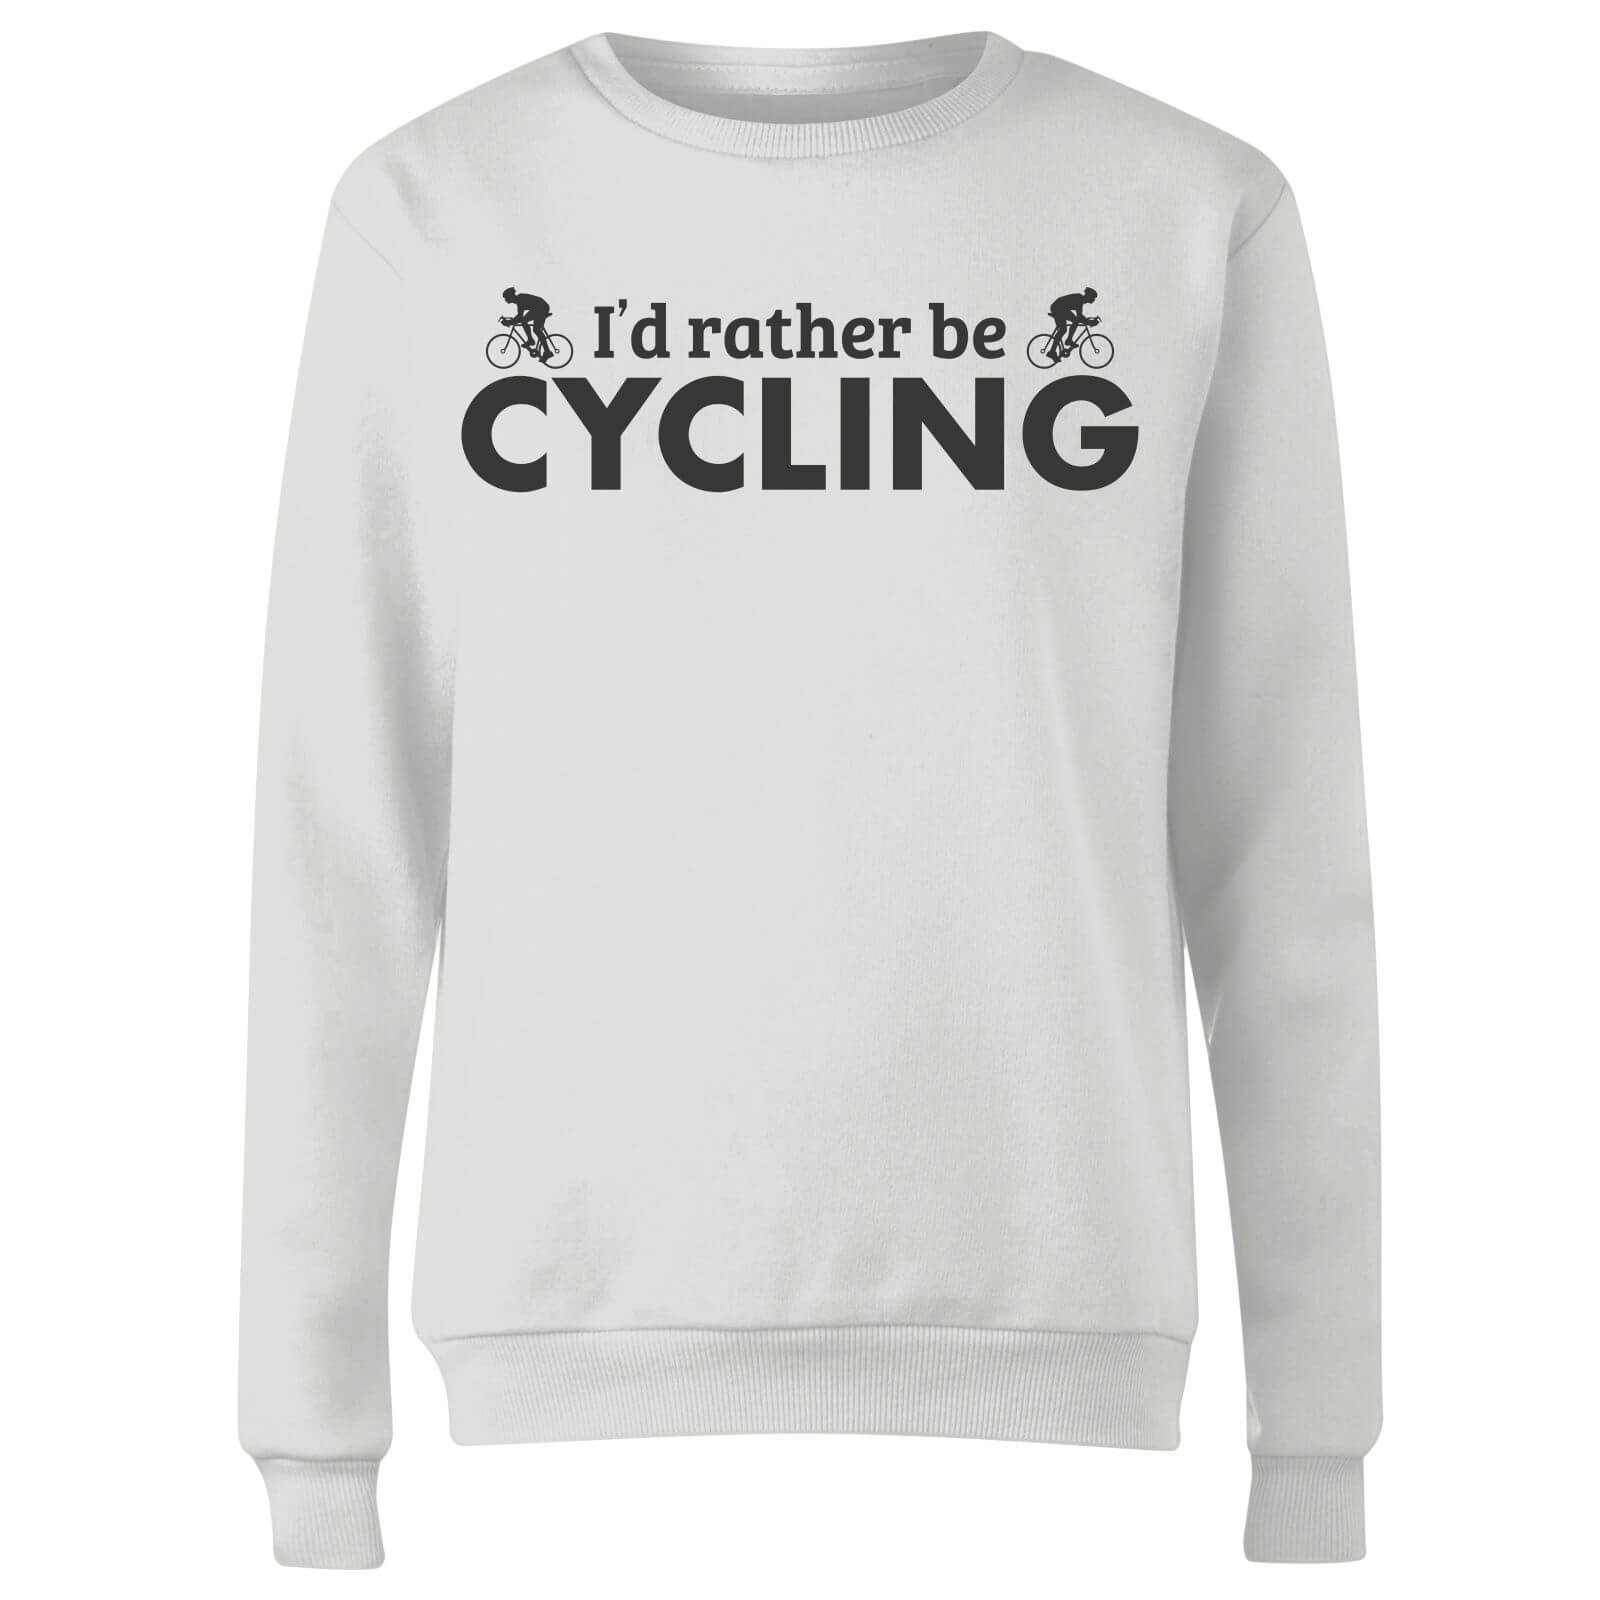 I'd Rather be Cycling Women's Sweatshirt - White - XXL - White